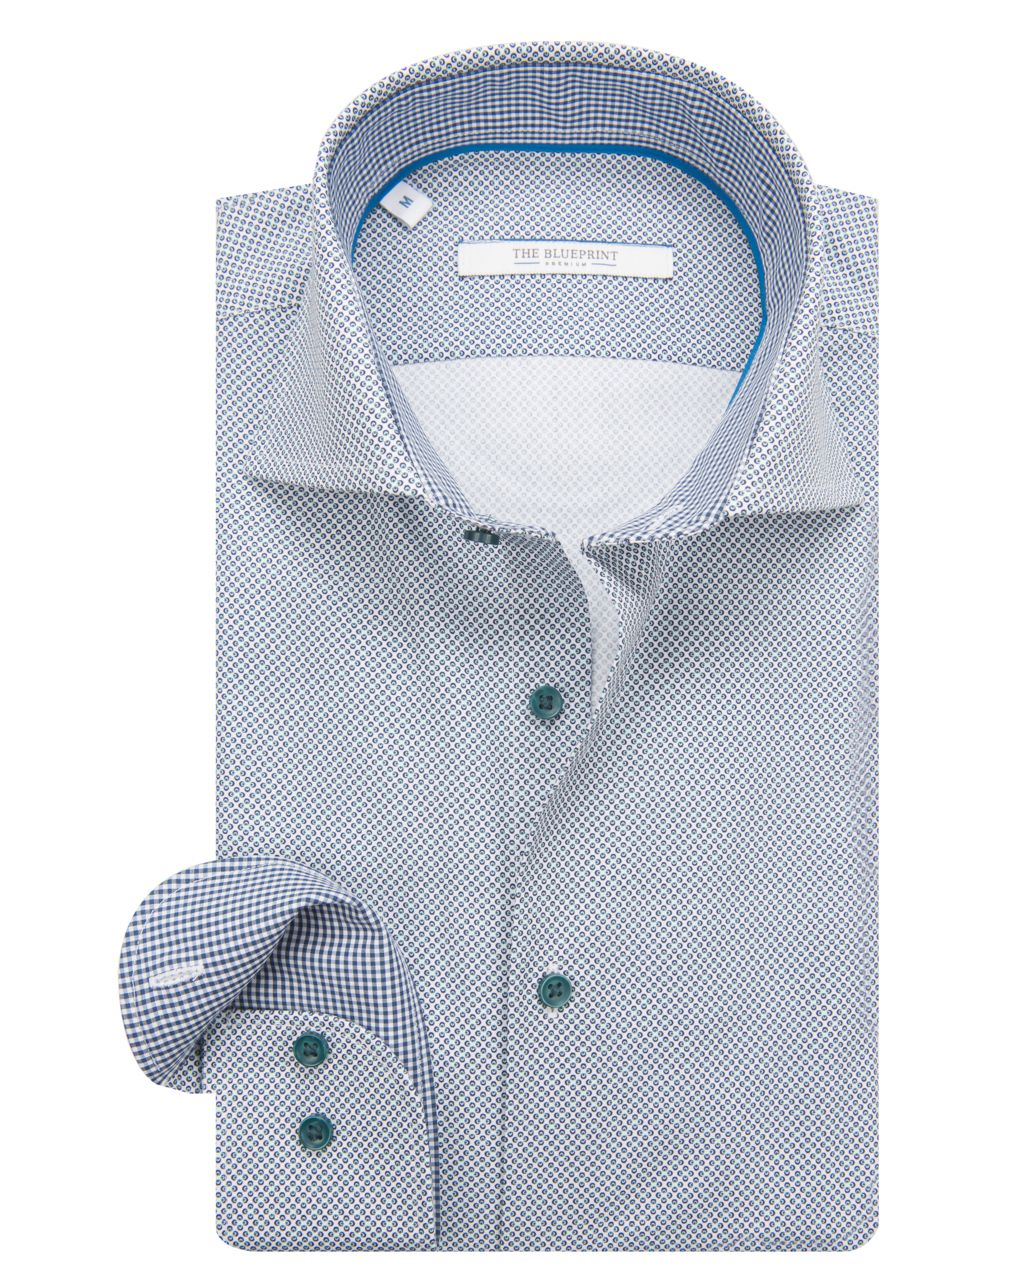 The BLUEPRINT Premium Trendy overhemd LM Wit print 061902-001-L